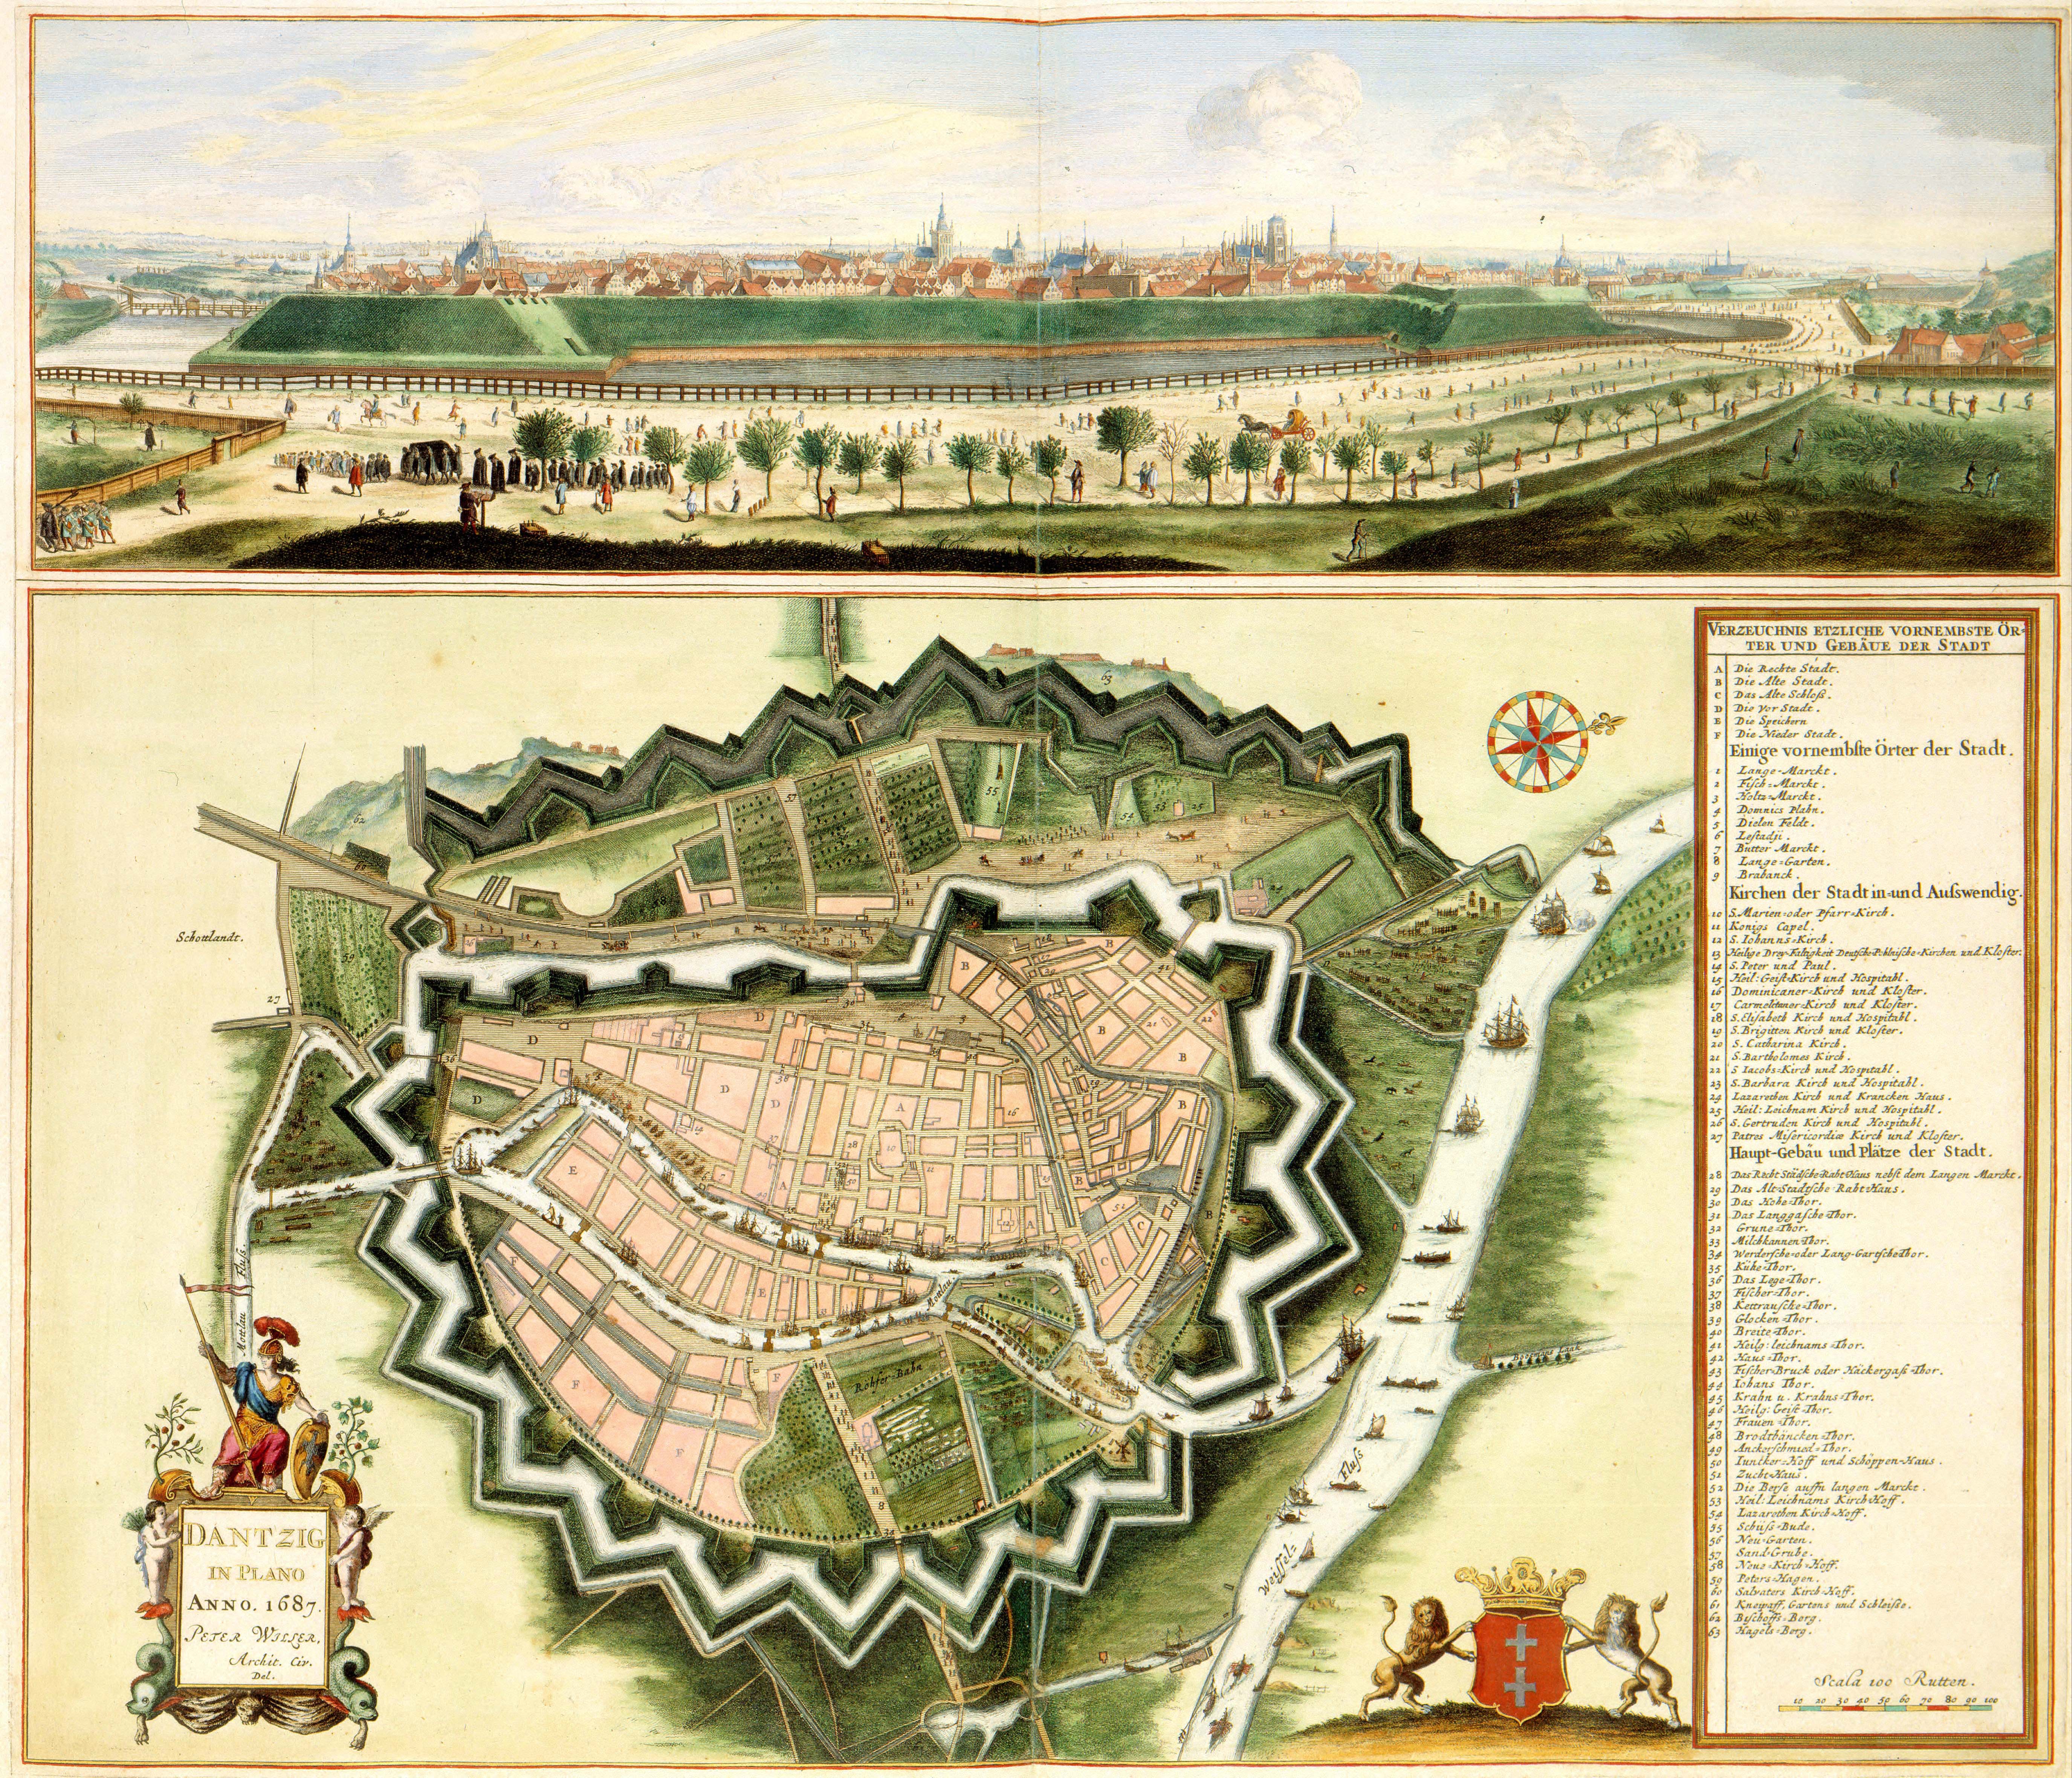 File:Atlas Van der Hagen-KW1049B10 038-DANTZIG IN PLANO ANNO. 1687.jpeg -  Wikimedia Commons